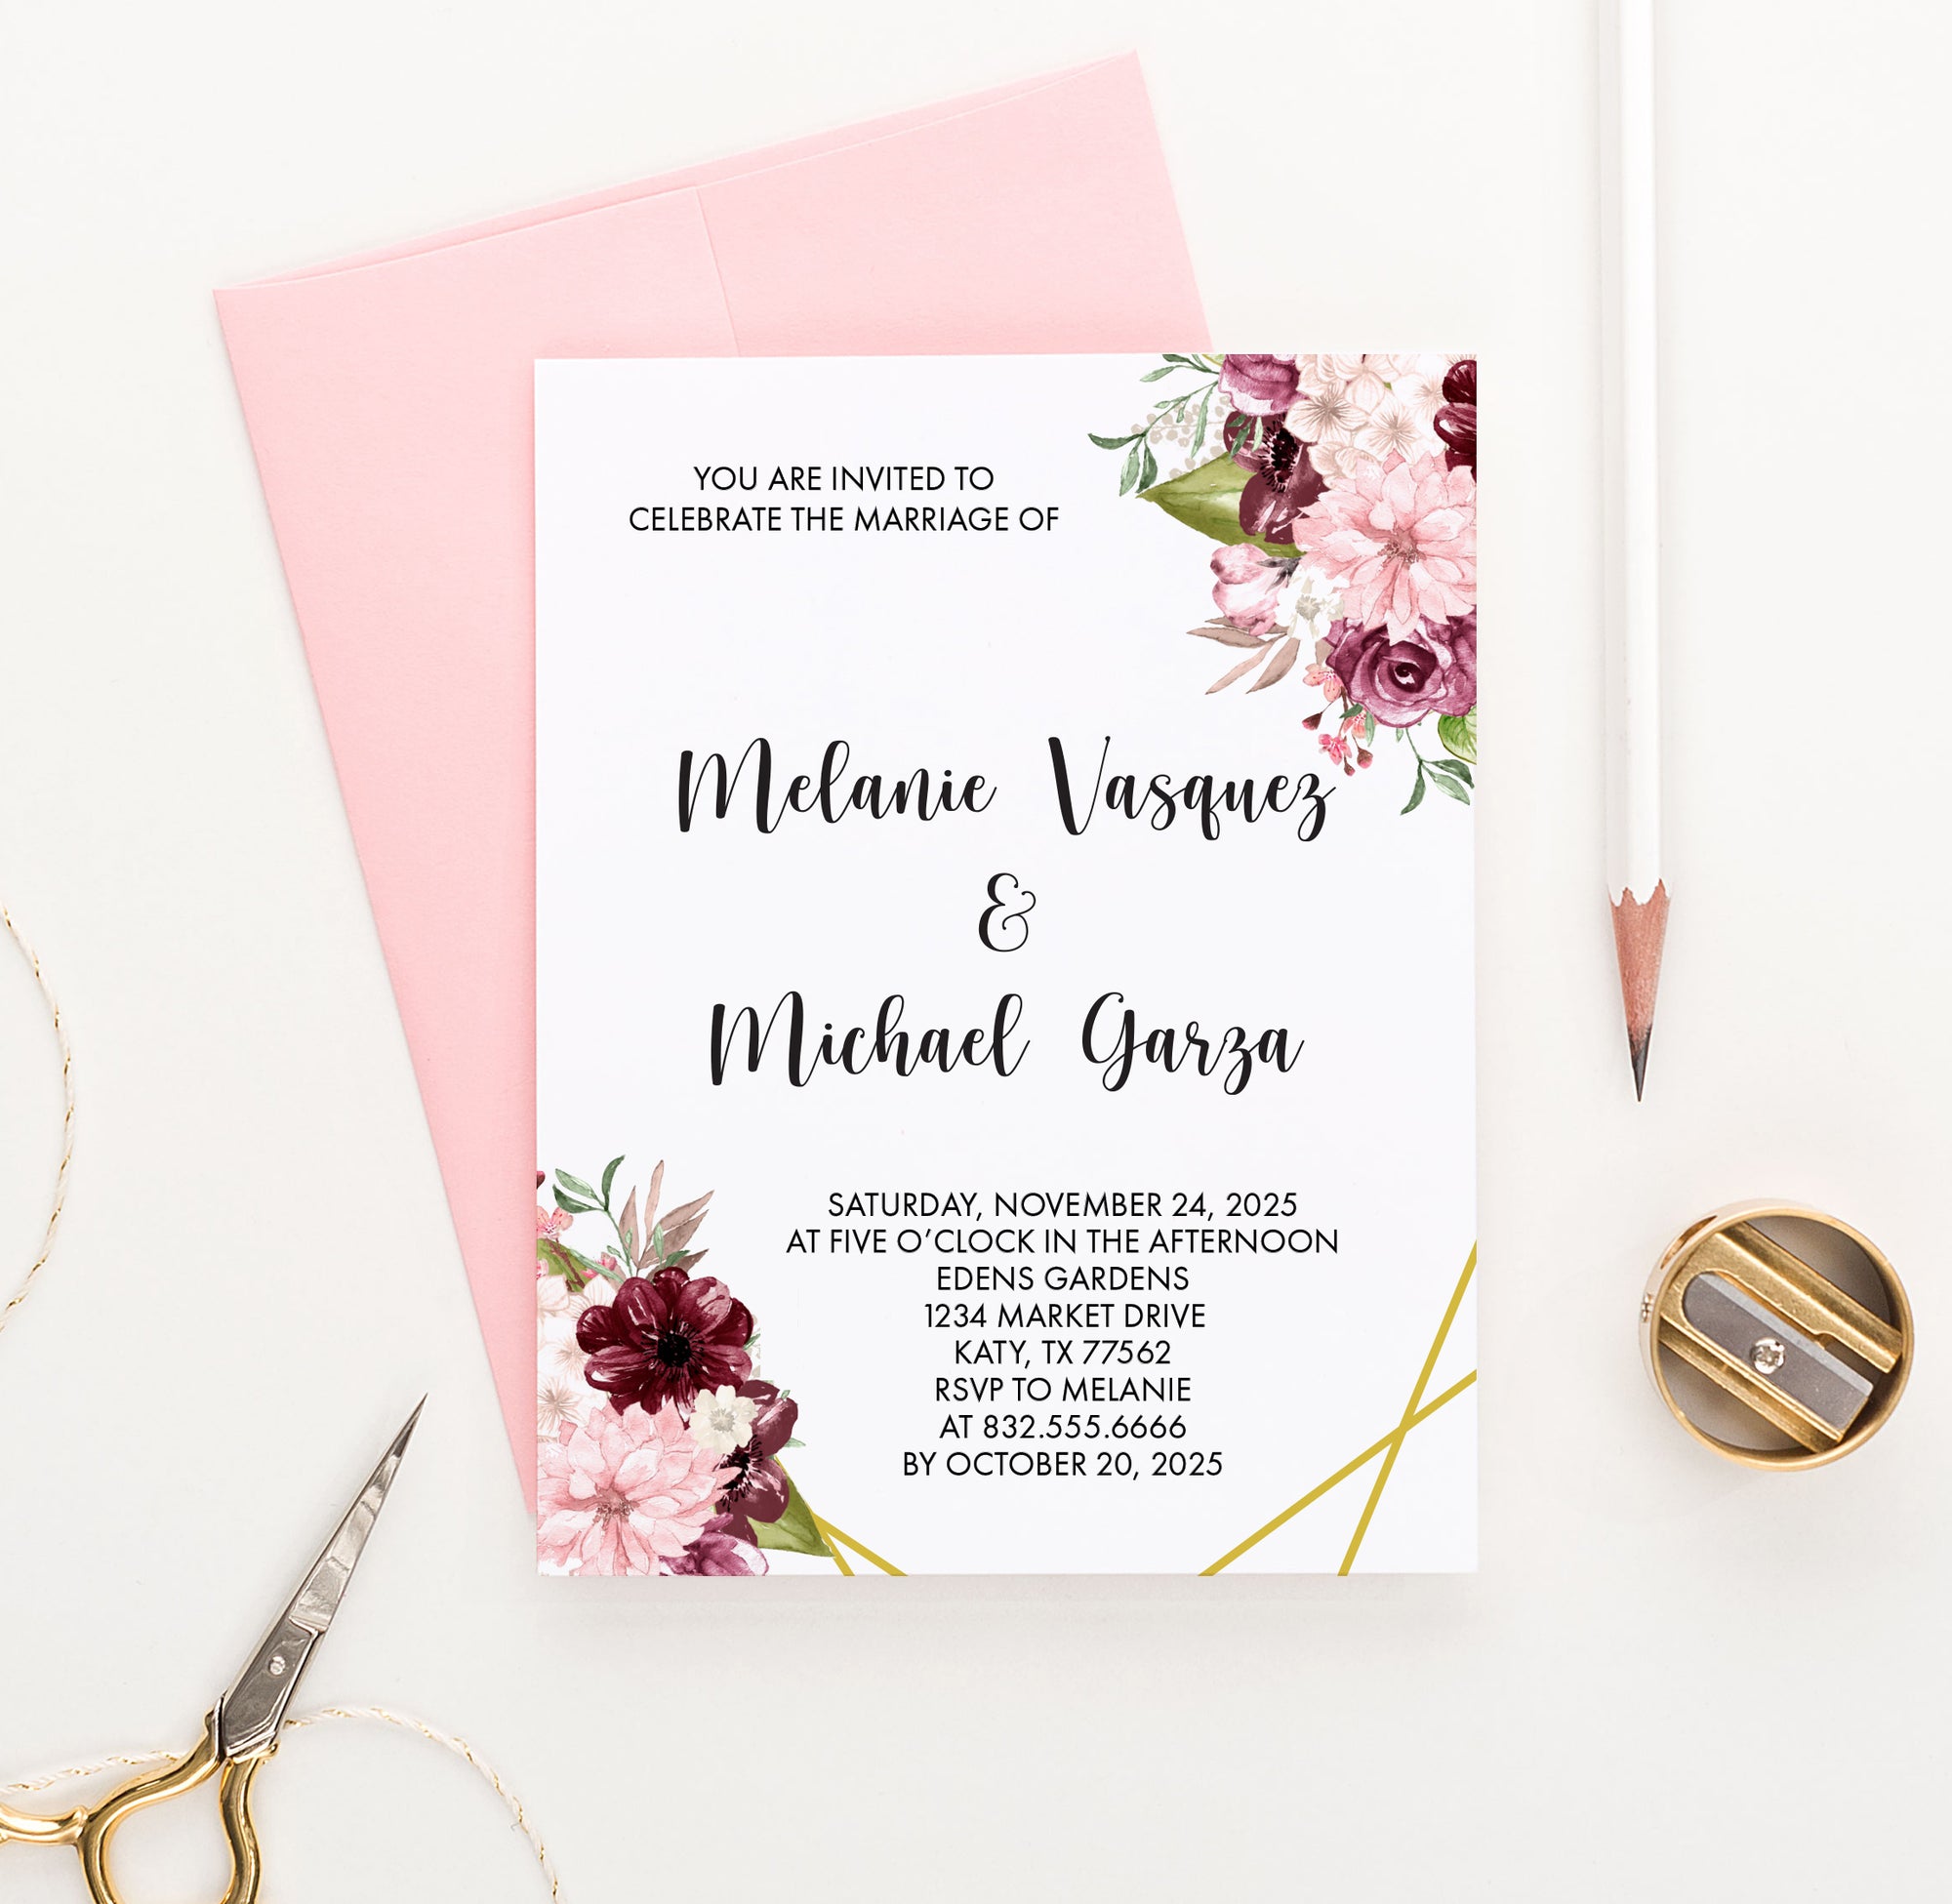 WI008 Personalized Burgundy Floral Wedding Invites flowers flower elegant modern pink maroon invitations marriage